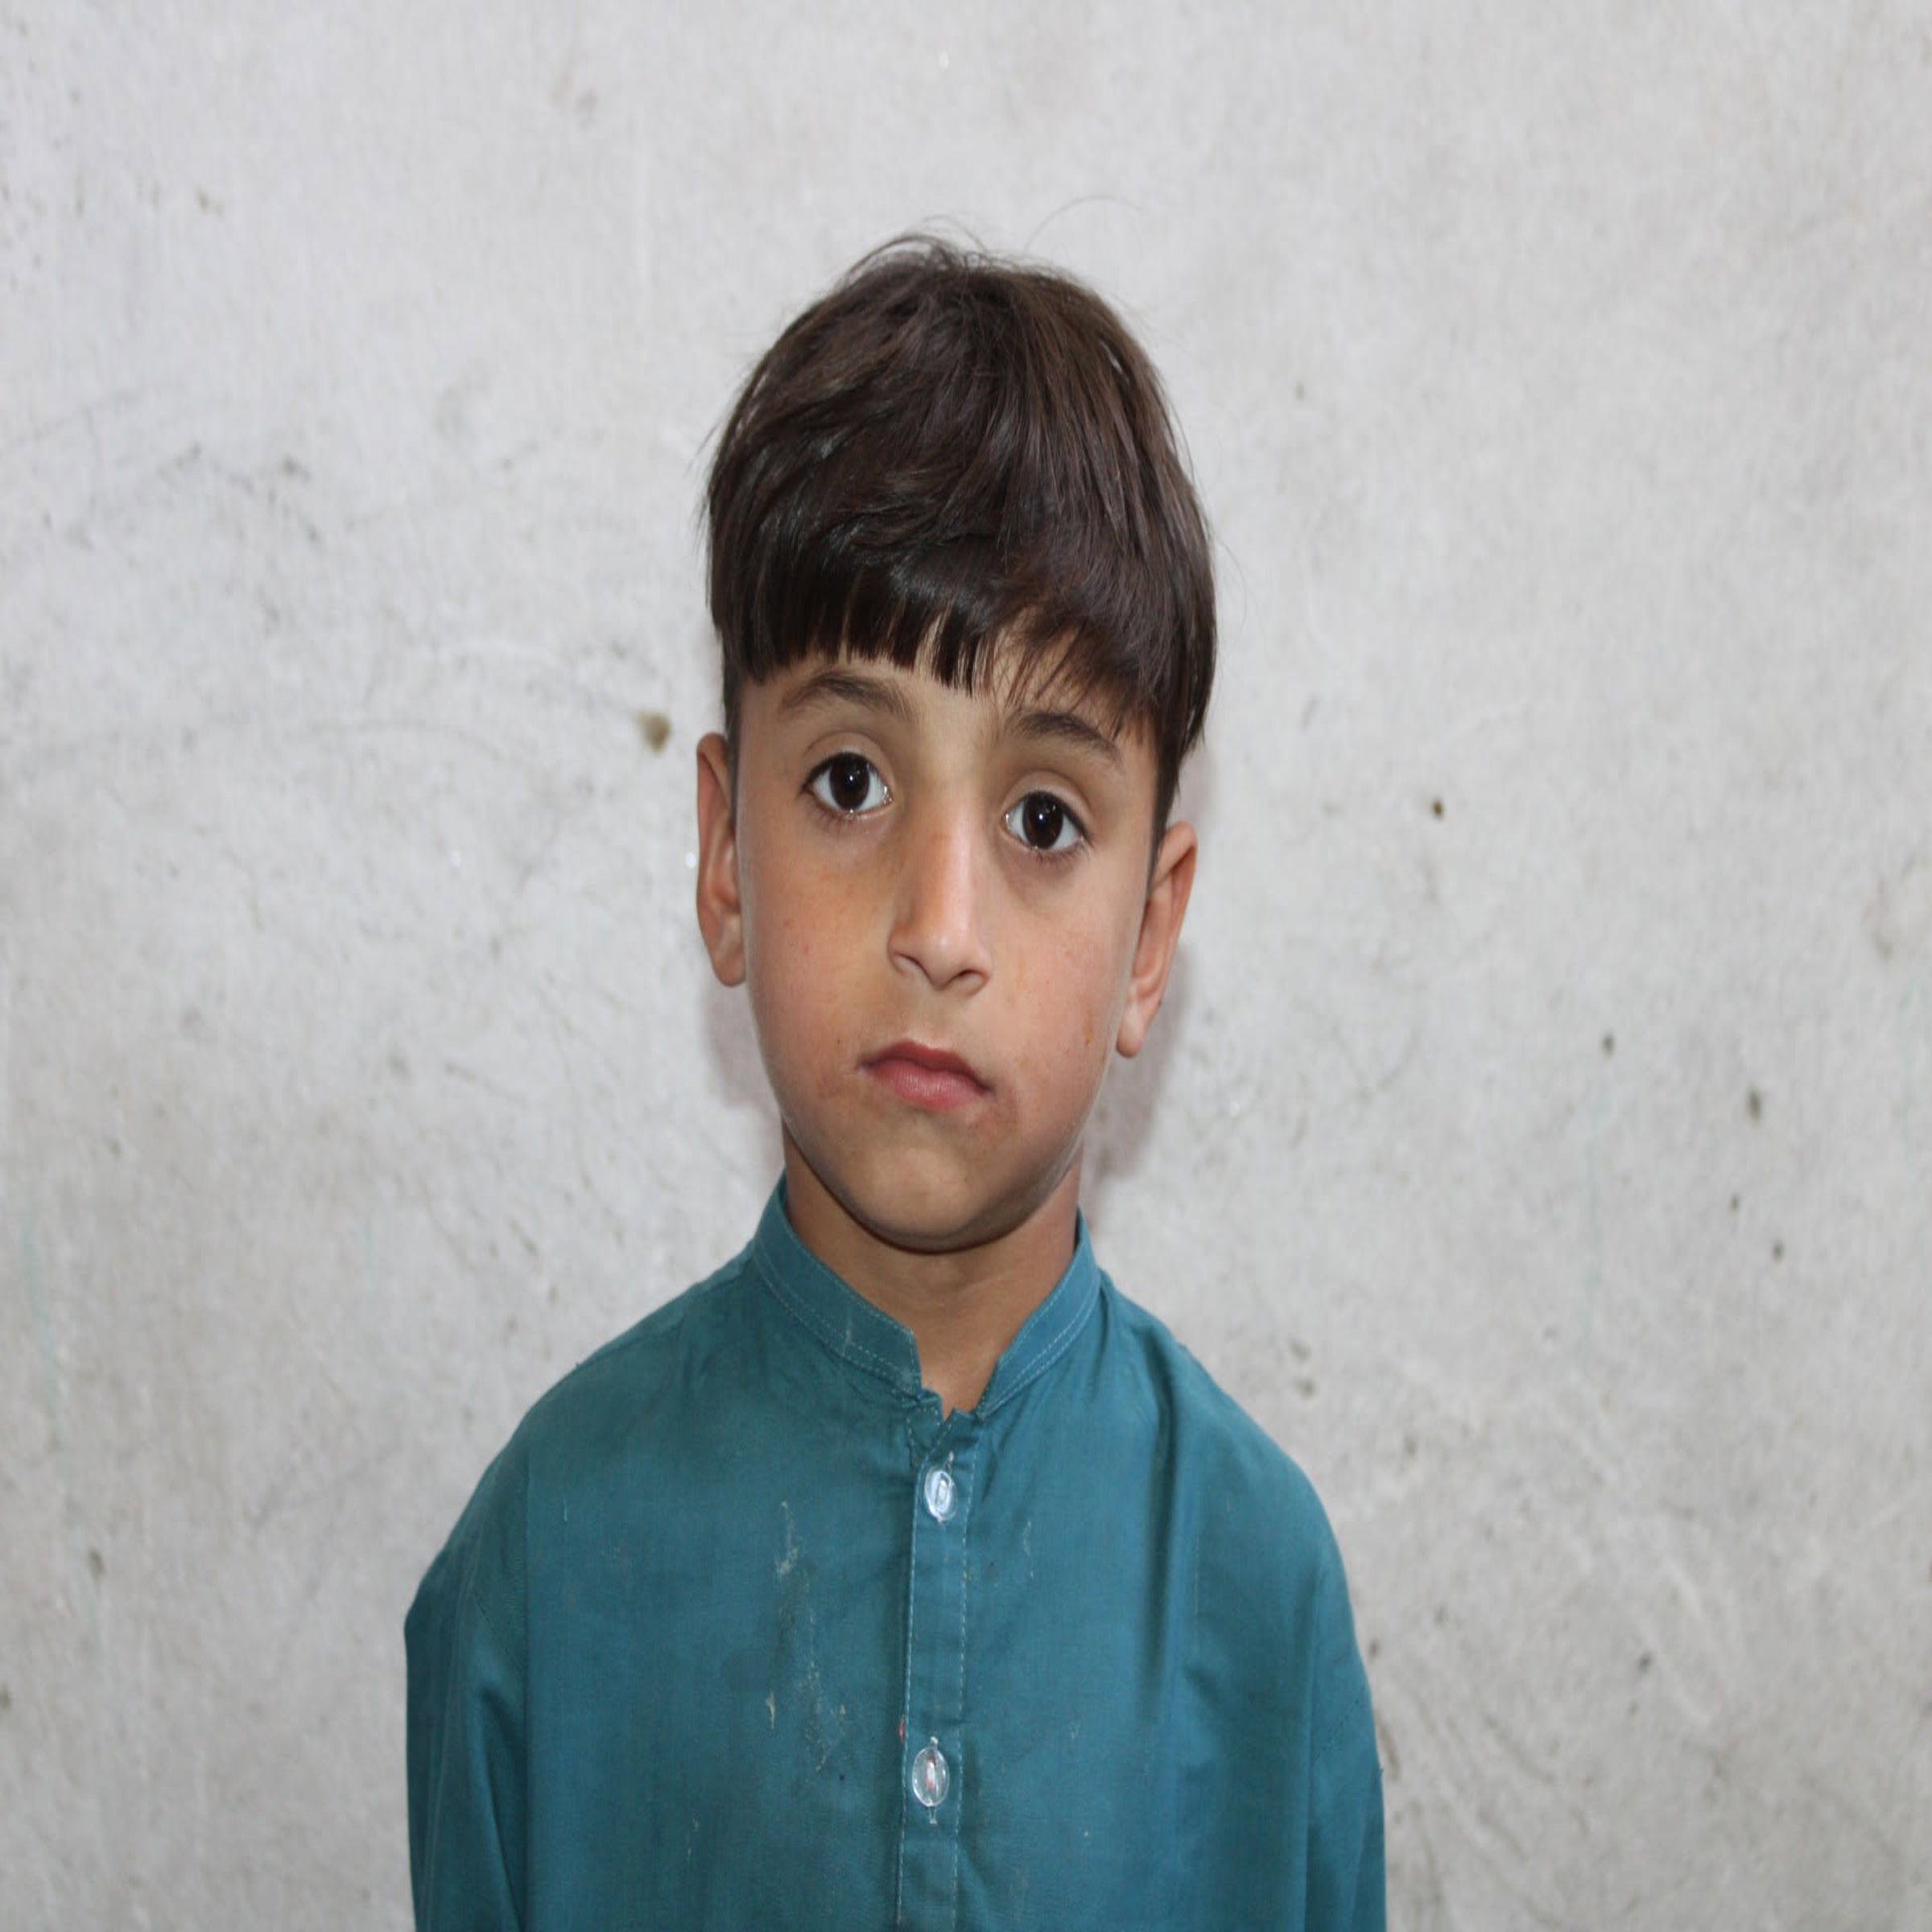 Human Appeal Orphan - Shahzad